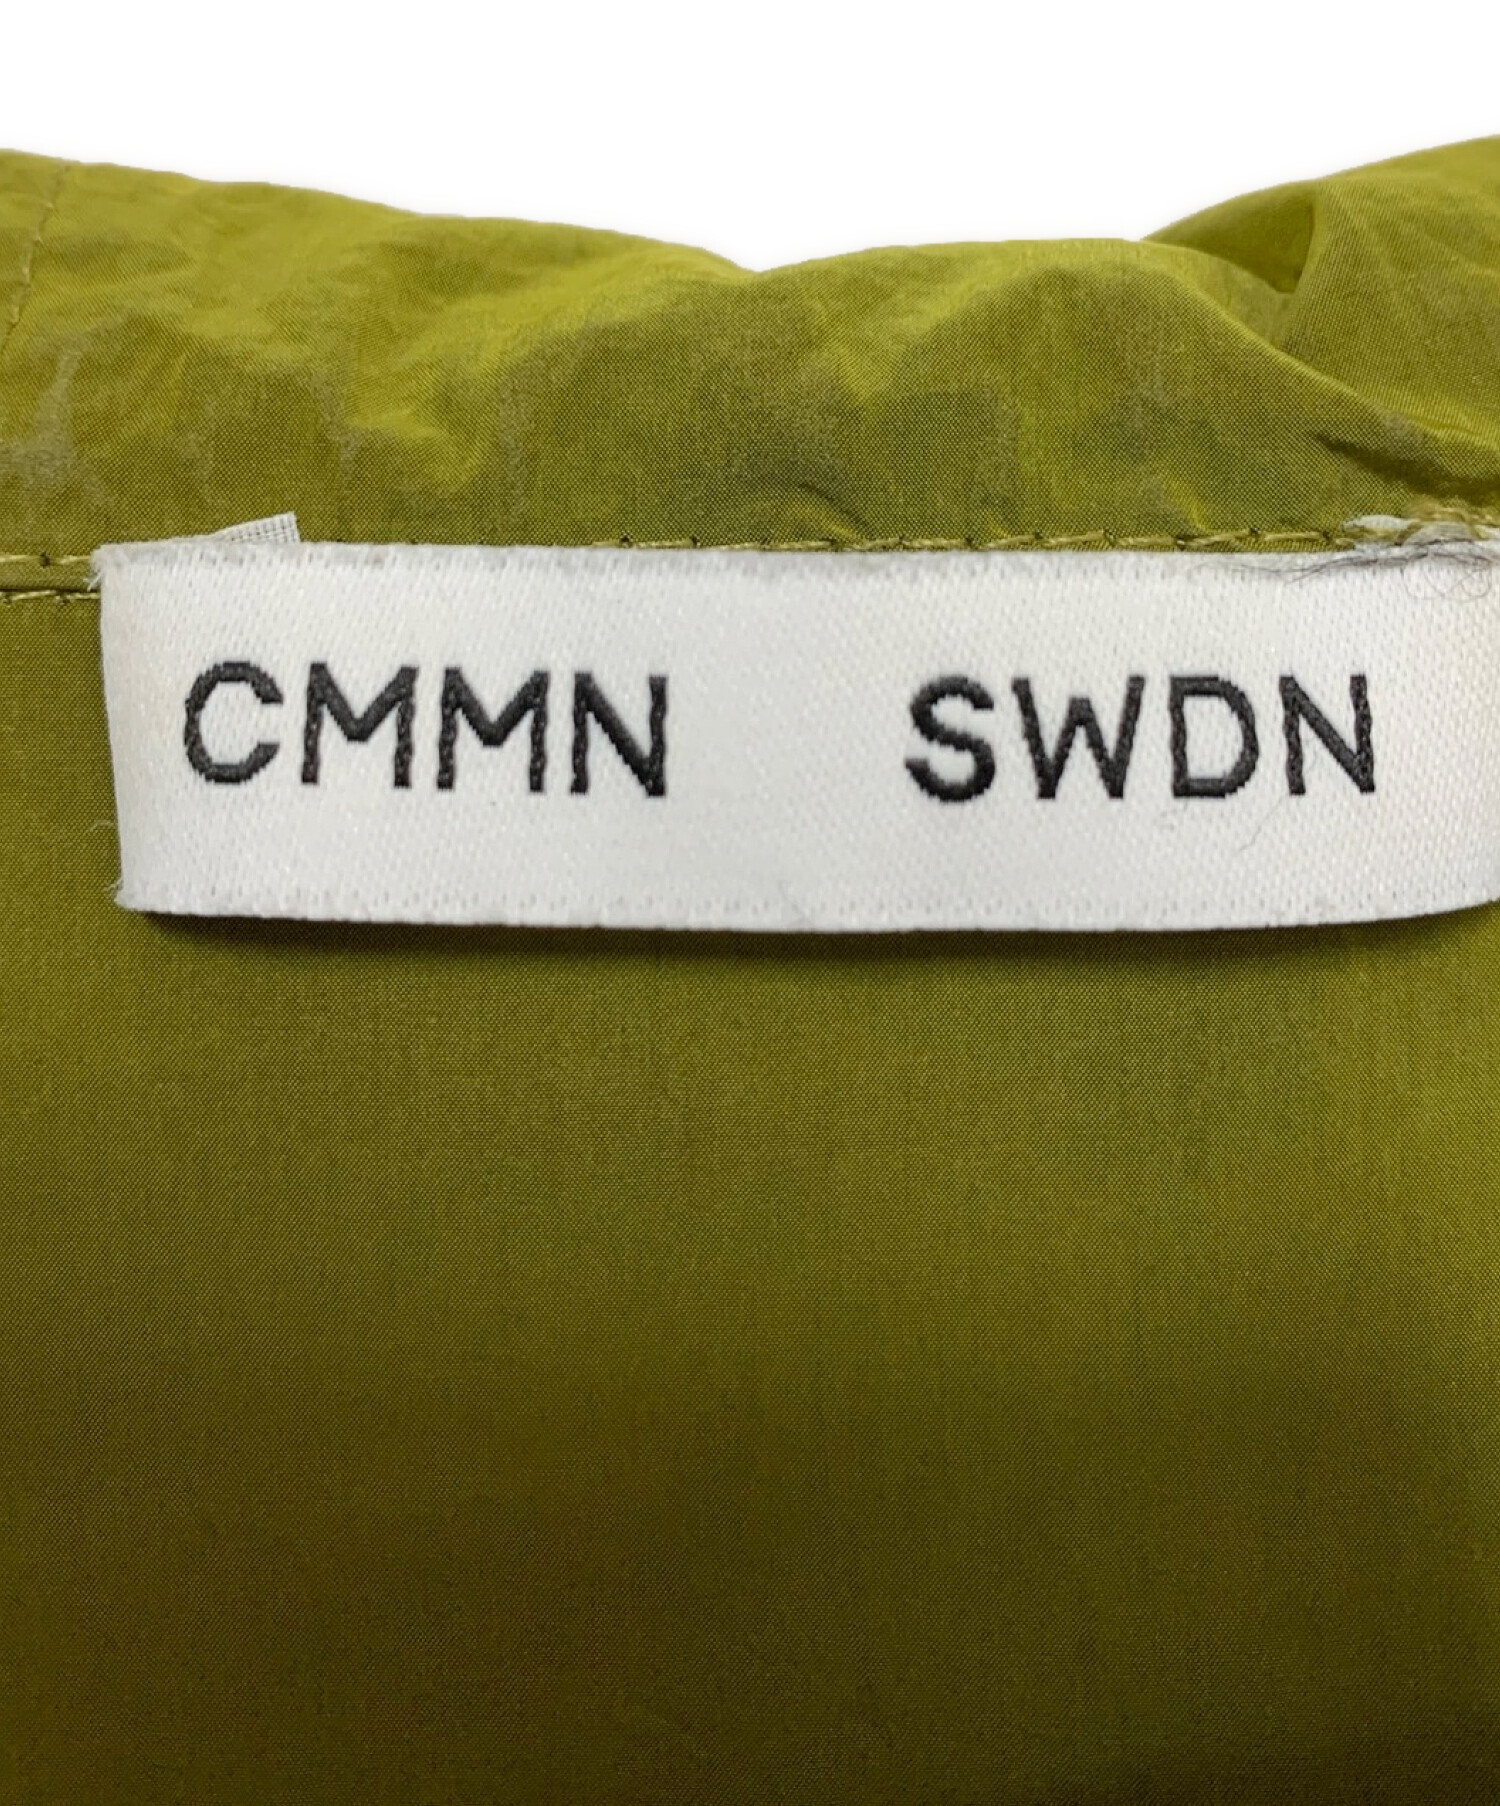 CMMN SWDN (コモンスウェーデン) ナイロンジャケット グリーン サイズ:48